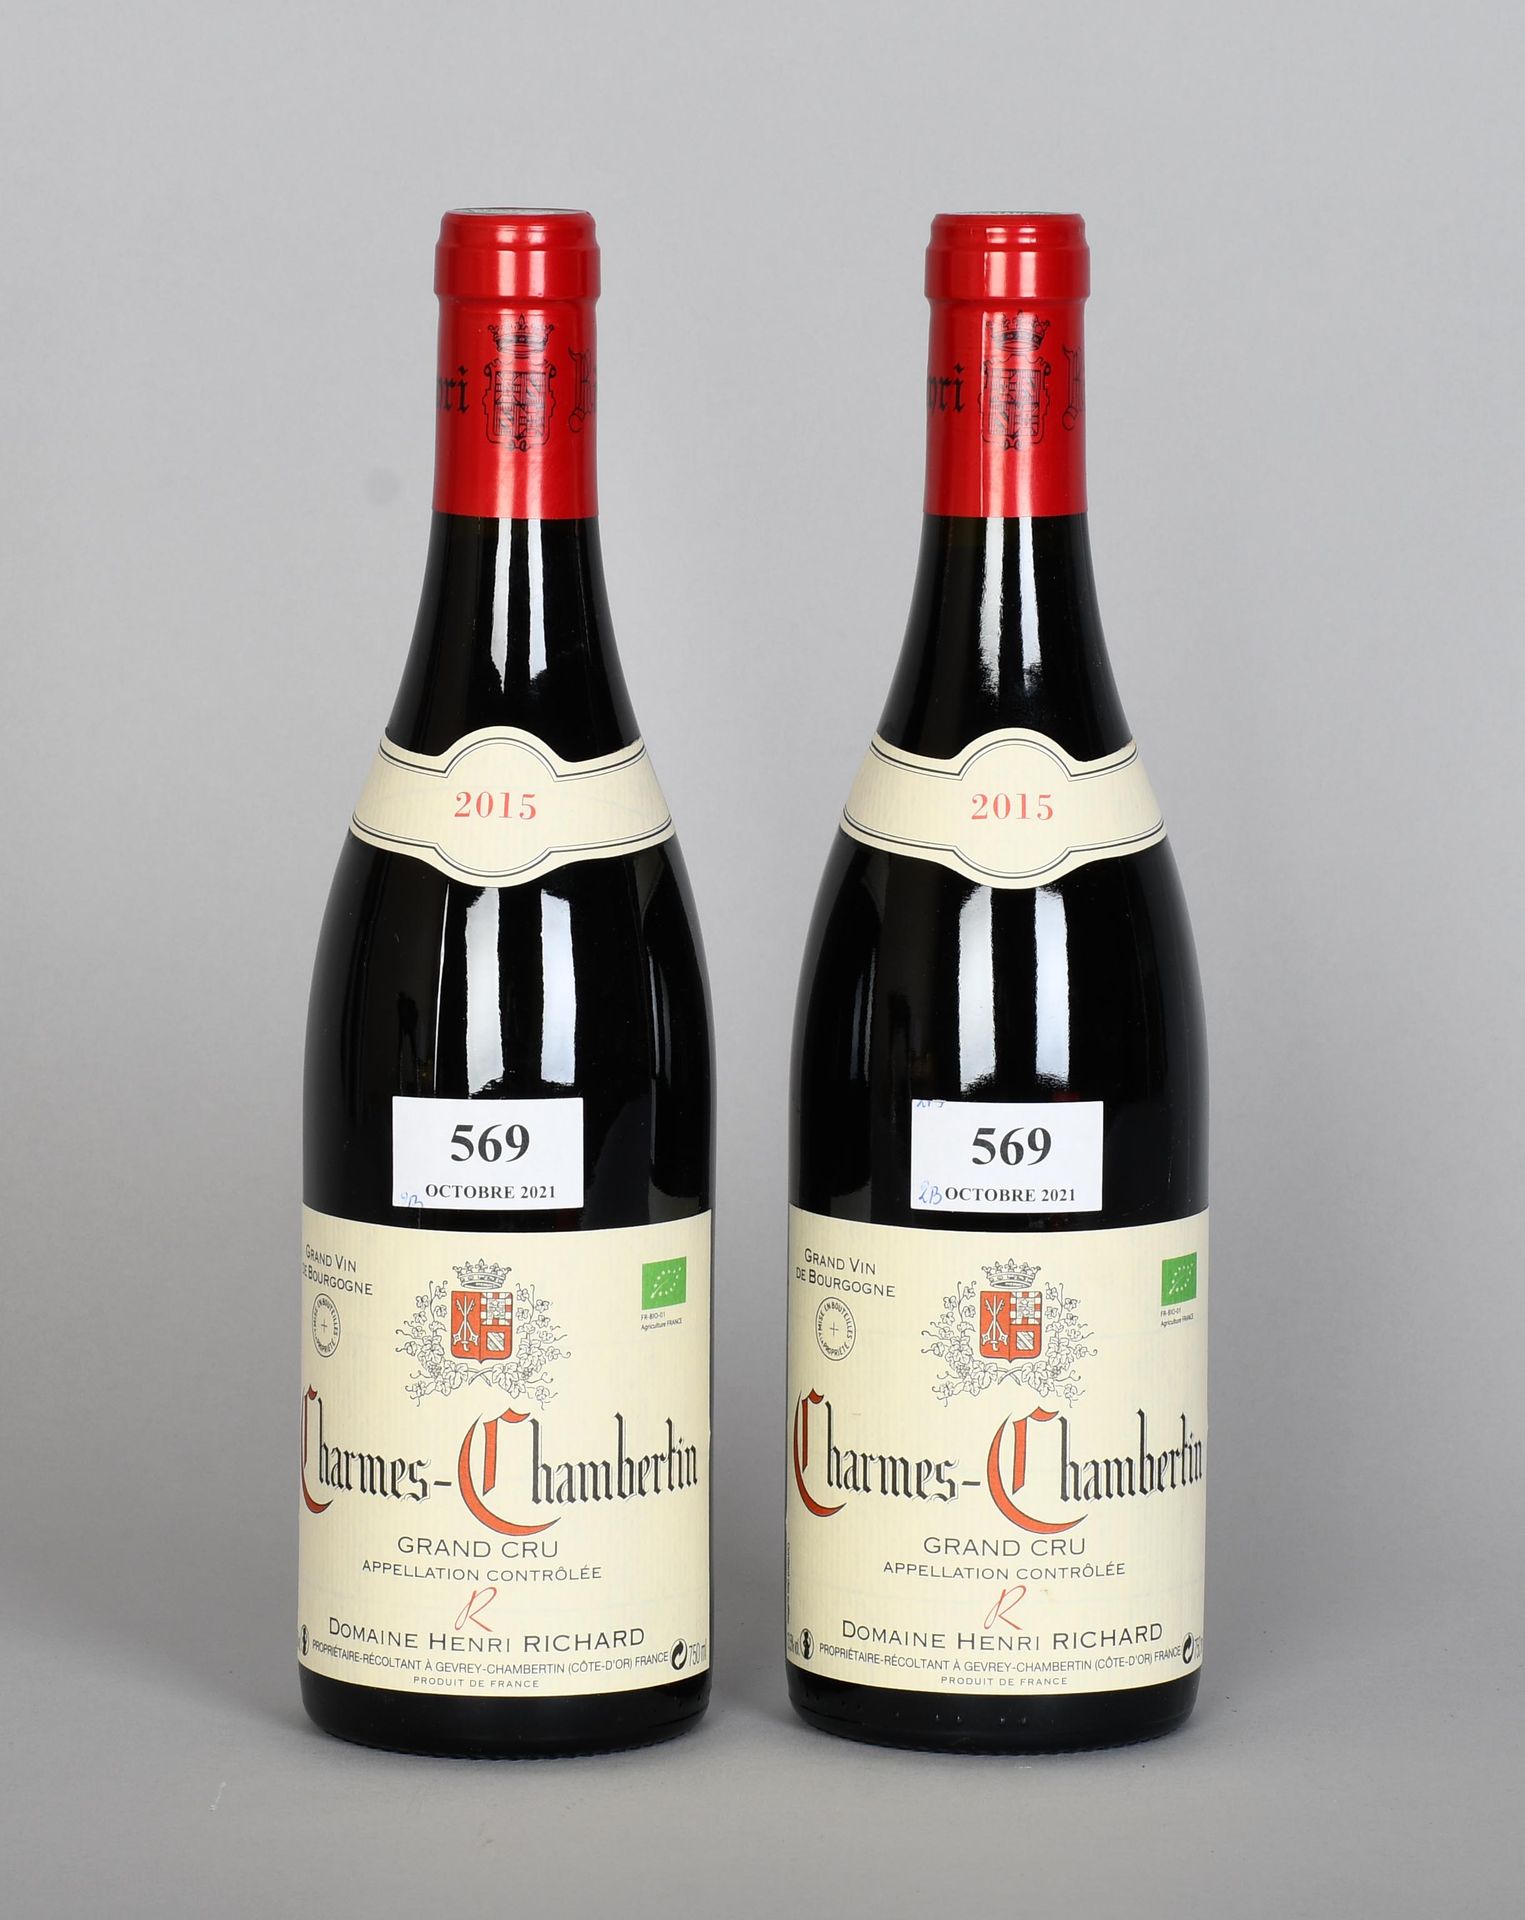 Null Charmes-Chambertin 2015 - Mise propriété - Dos botellas de vino

Grand cru.&hellip;